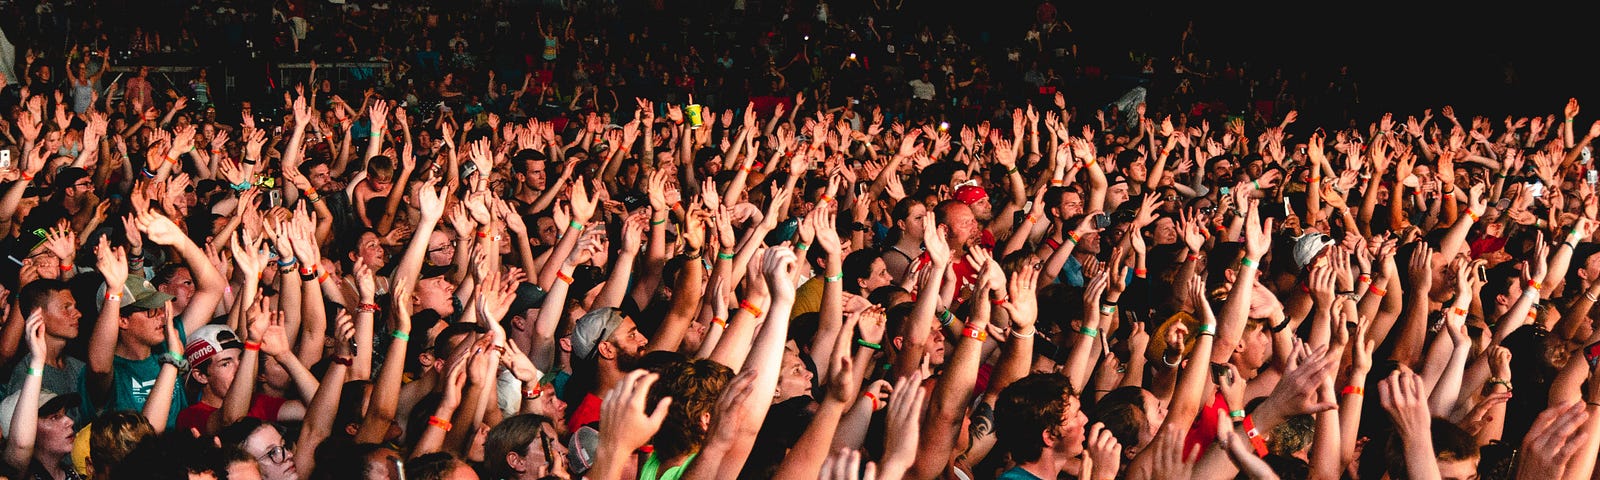 Crowd of people raising their hands